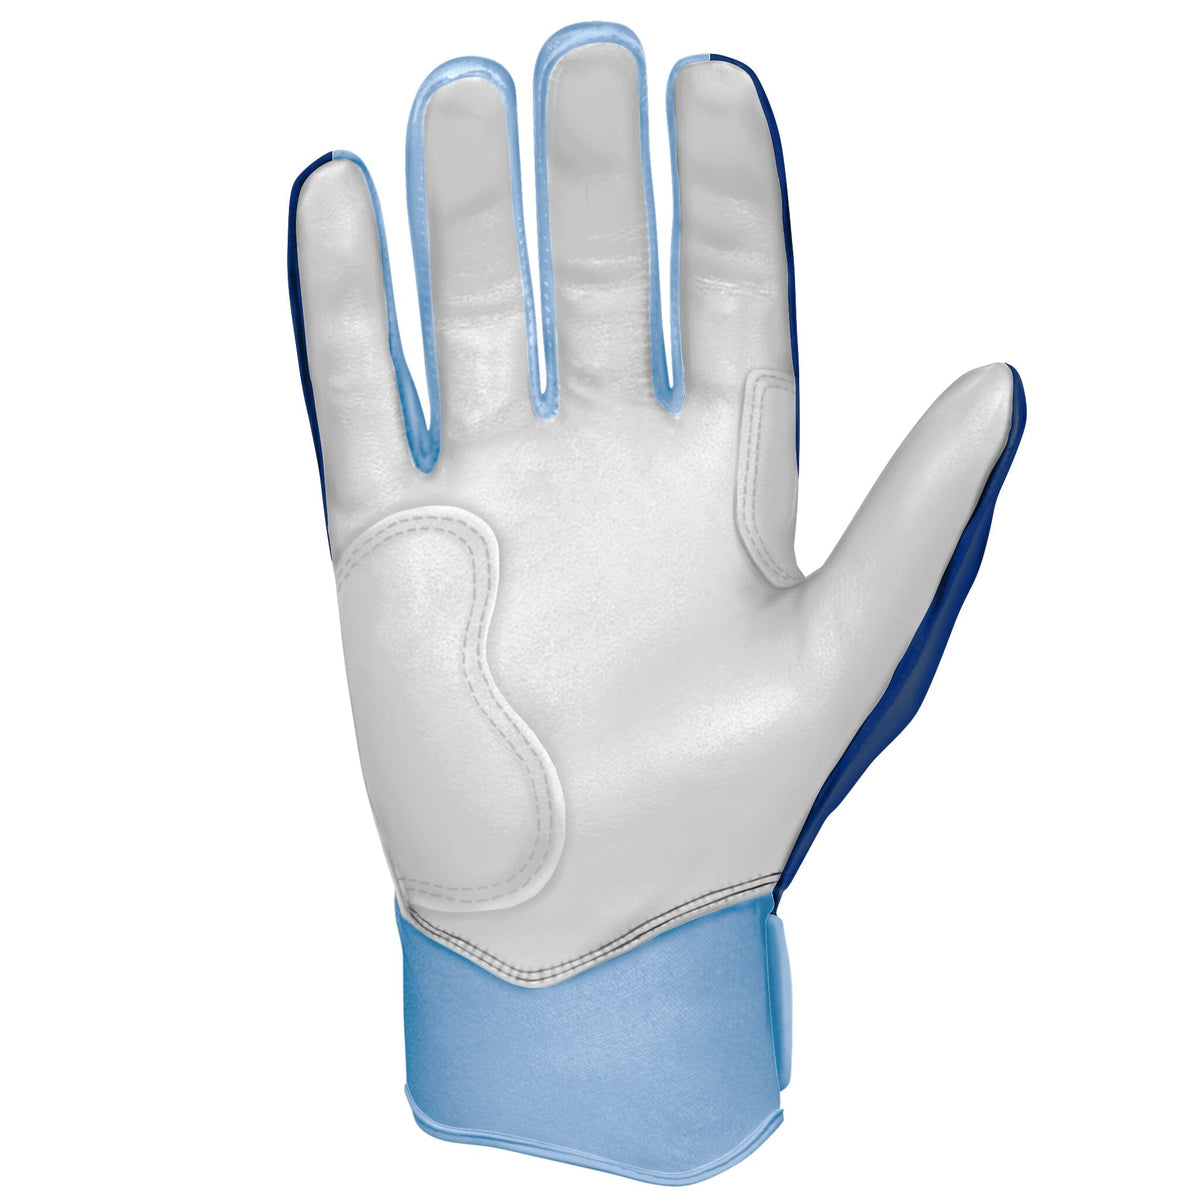 Light Blue and Navy Batting Gloves  Protective Batting Gloves – BRUCE BOLT